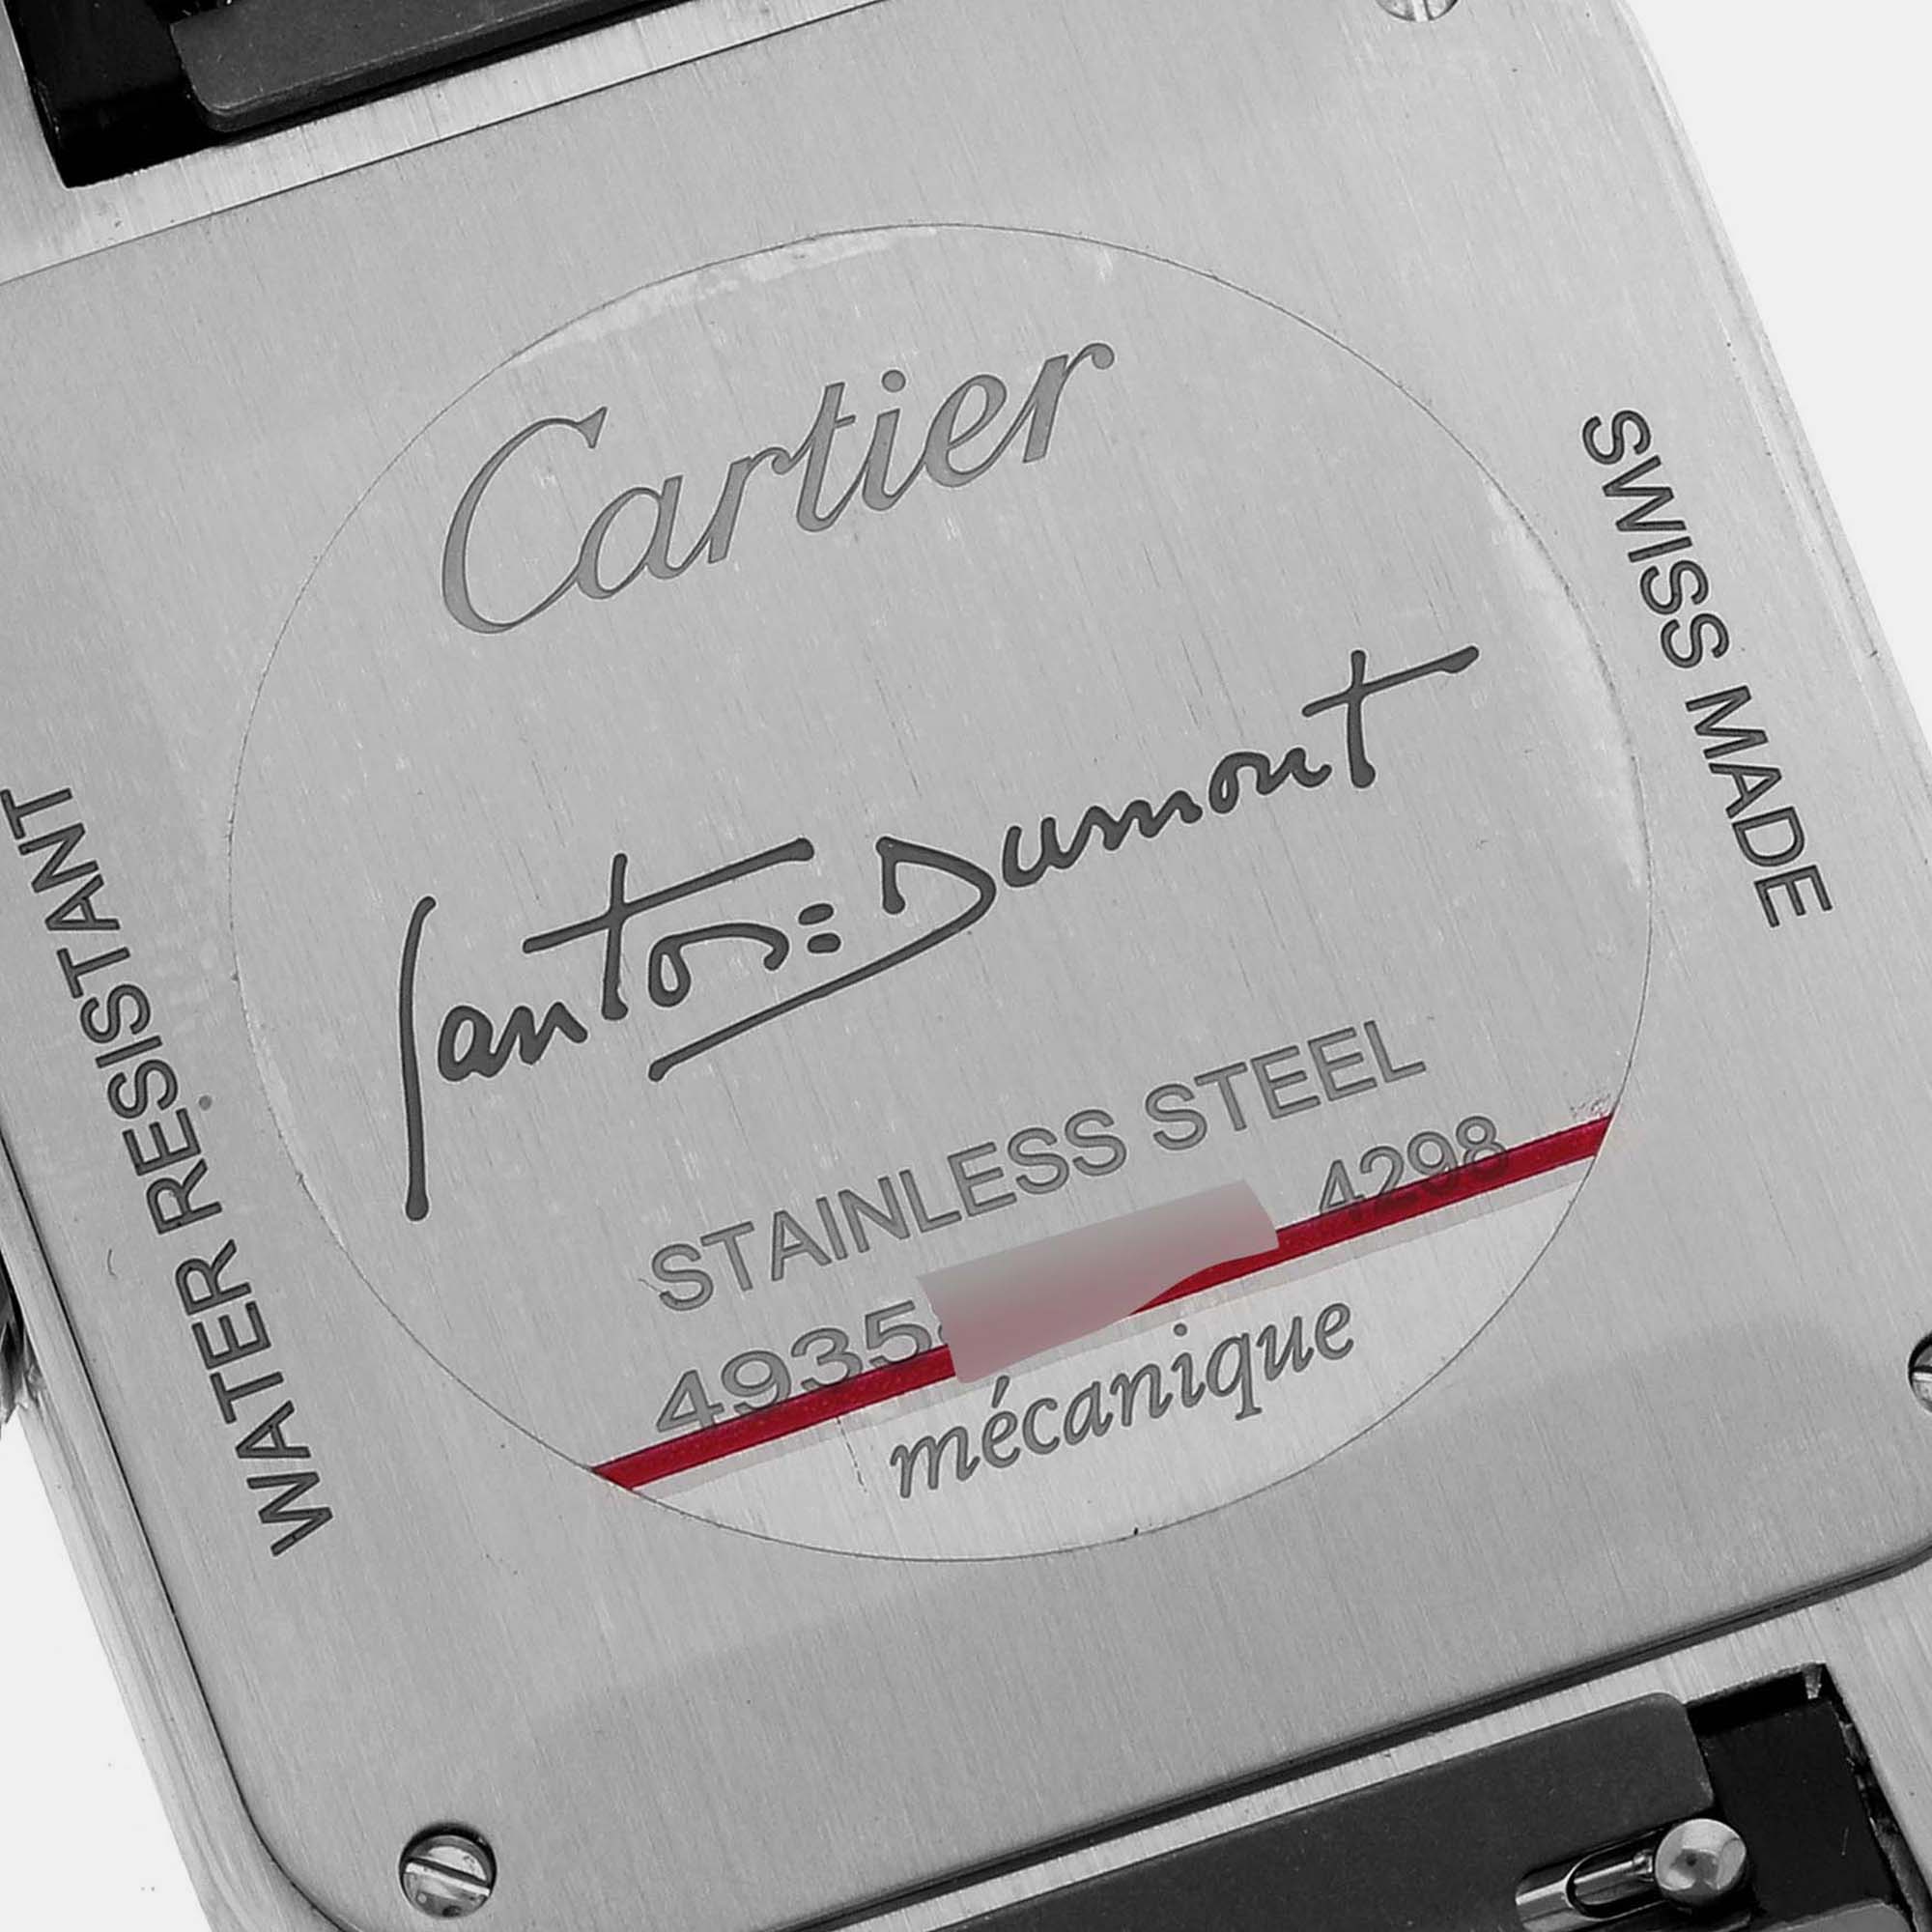 Cartier Santos Dumont Large Black Strap Steel Men's Watch WSSA0046 43.5 X 31.4 Mm